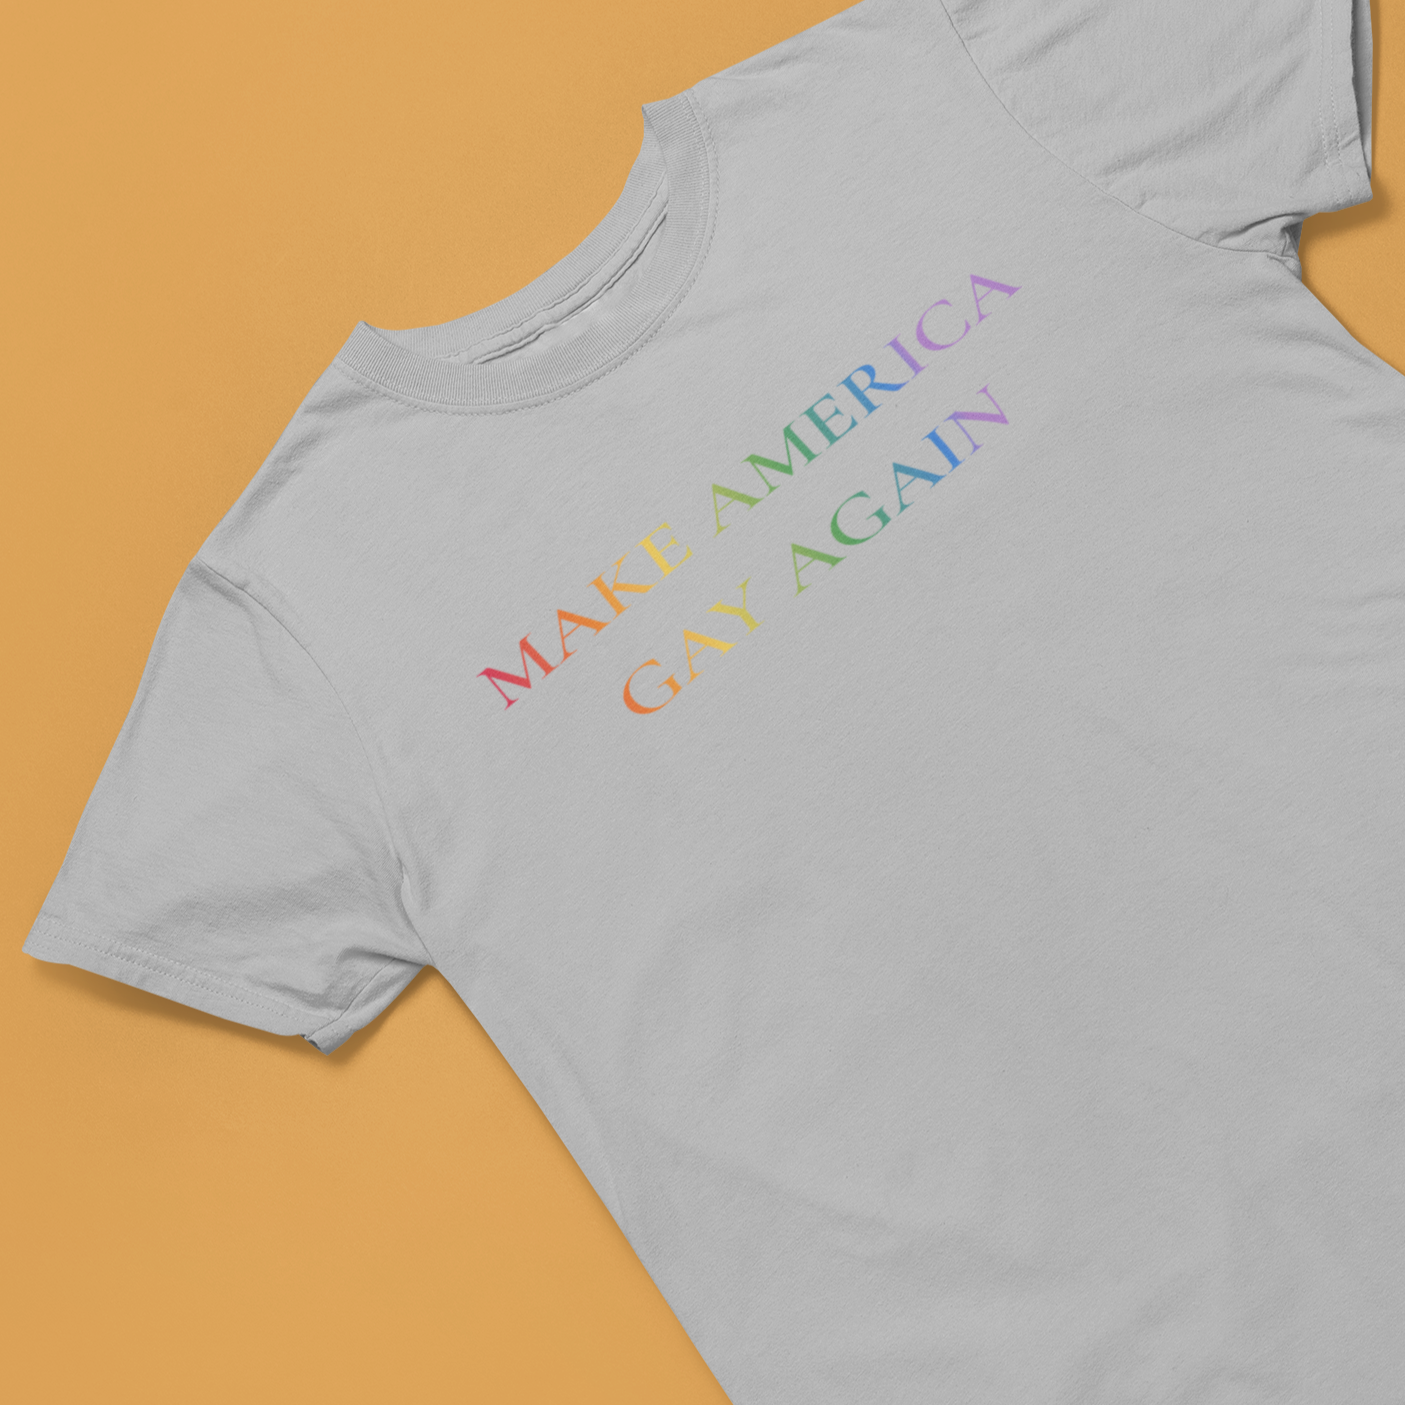 Make America Gay Again T-Shirt - Rose Gold Co. Shop